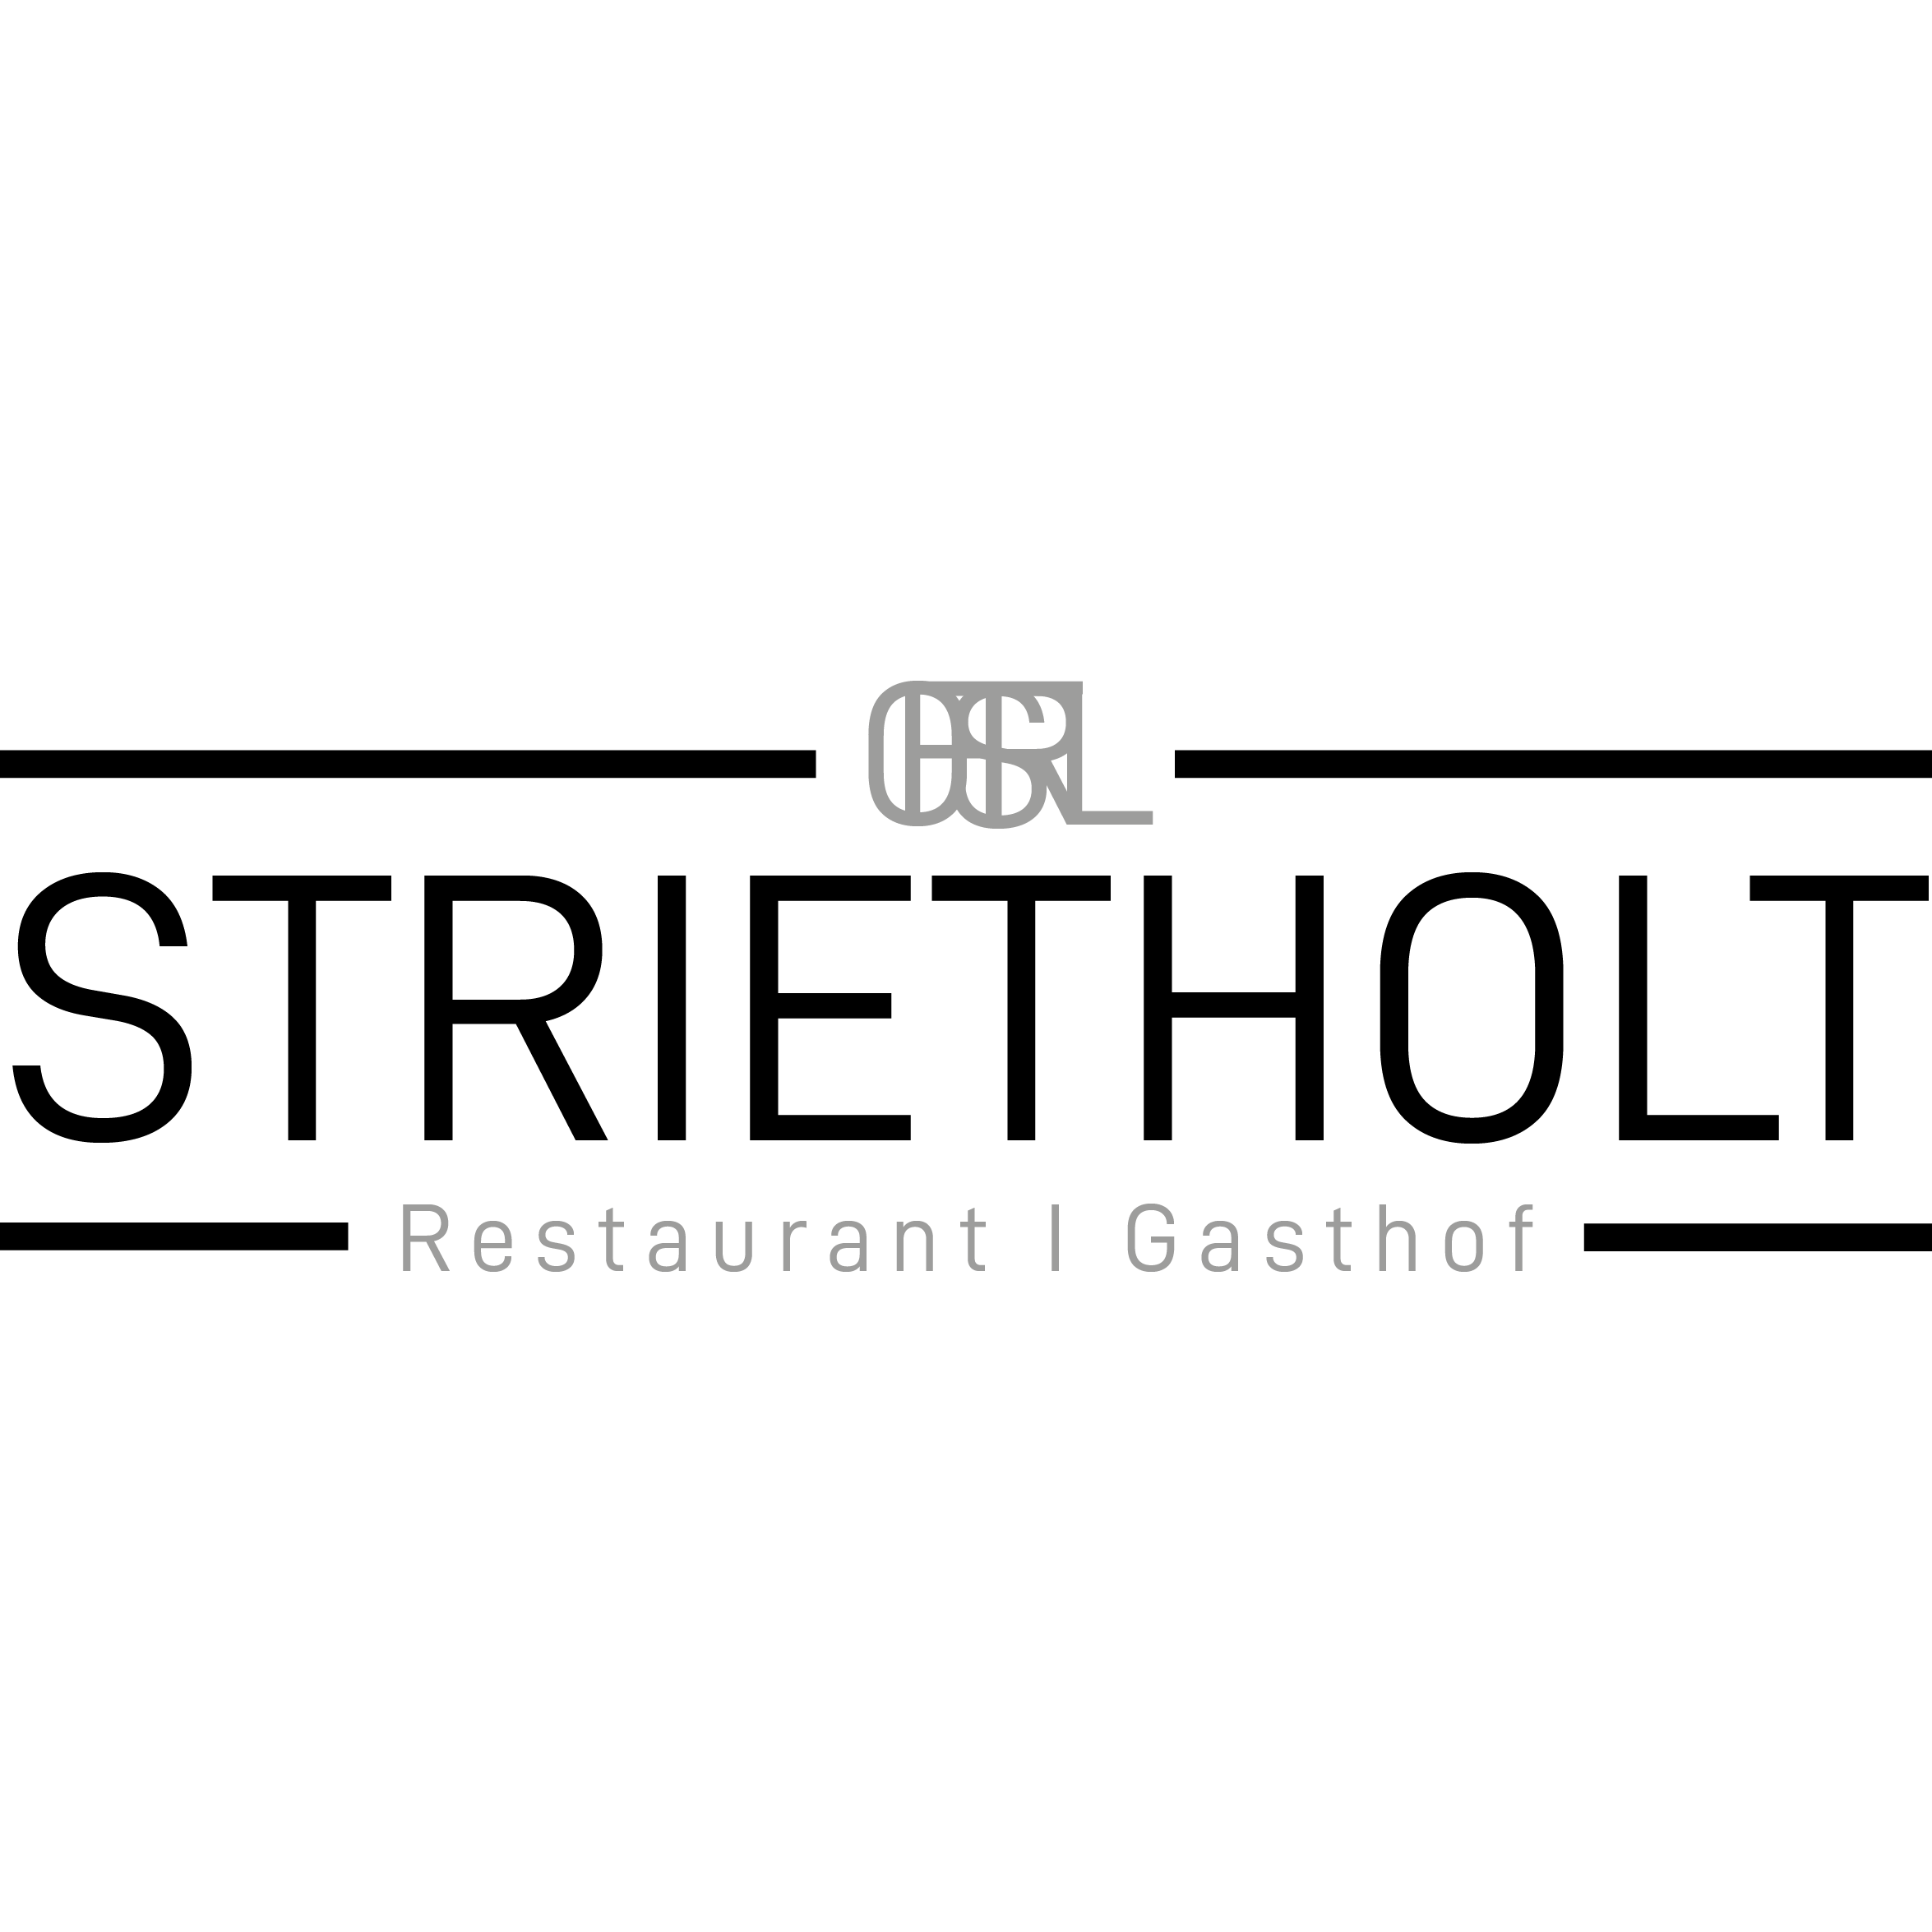 Gasthof Strietholt in Everswinkel - Logo